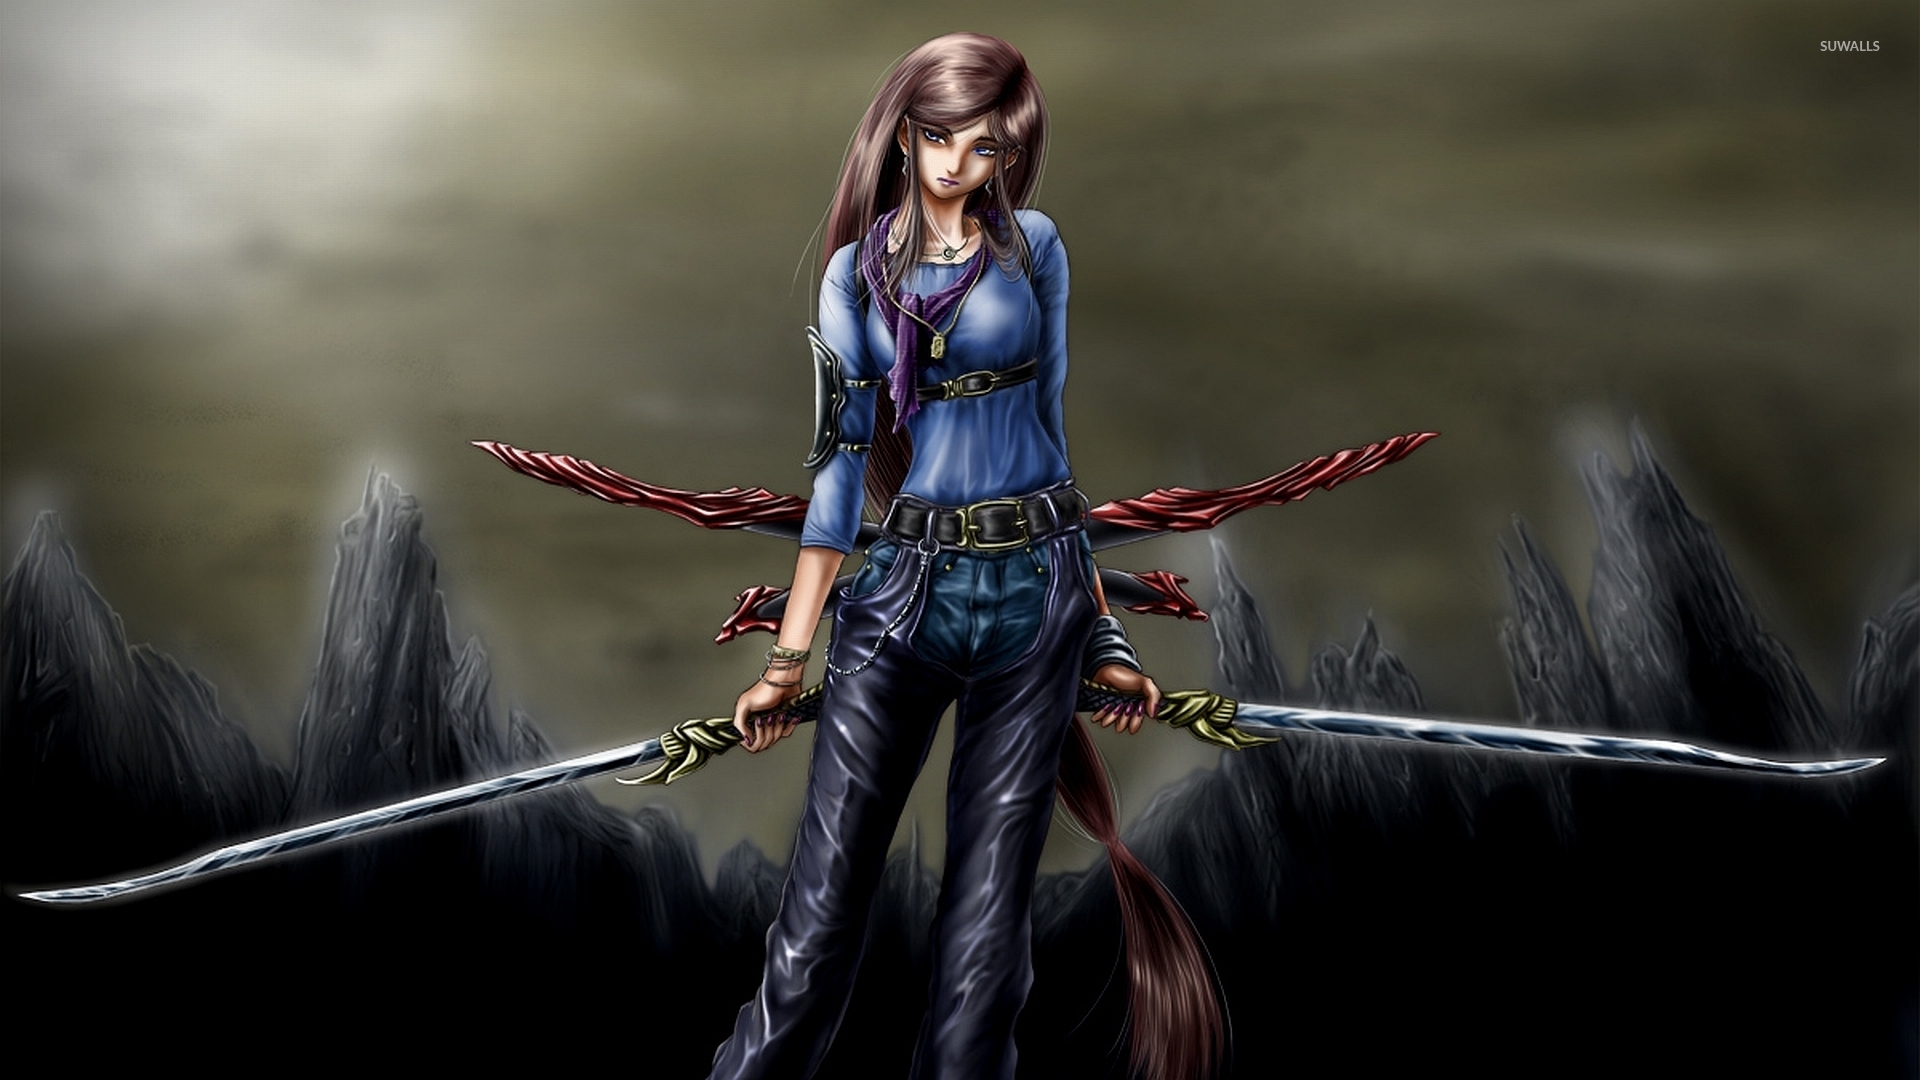 Dragon Rider Female Warrior 4K wallpaper download